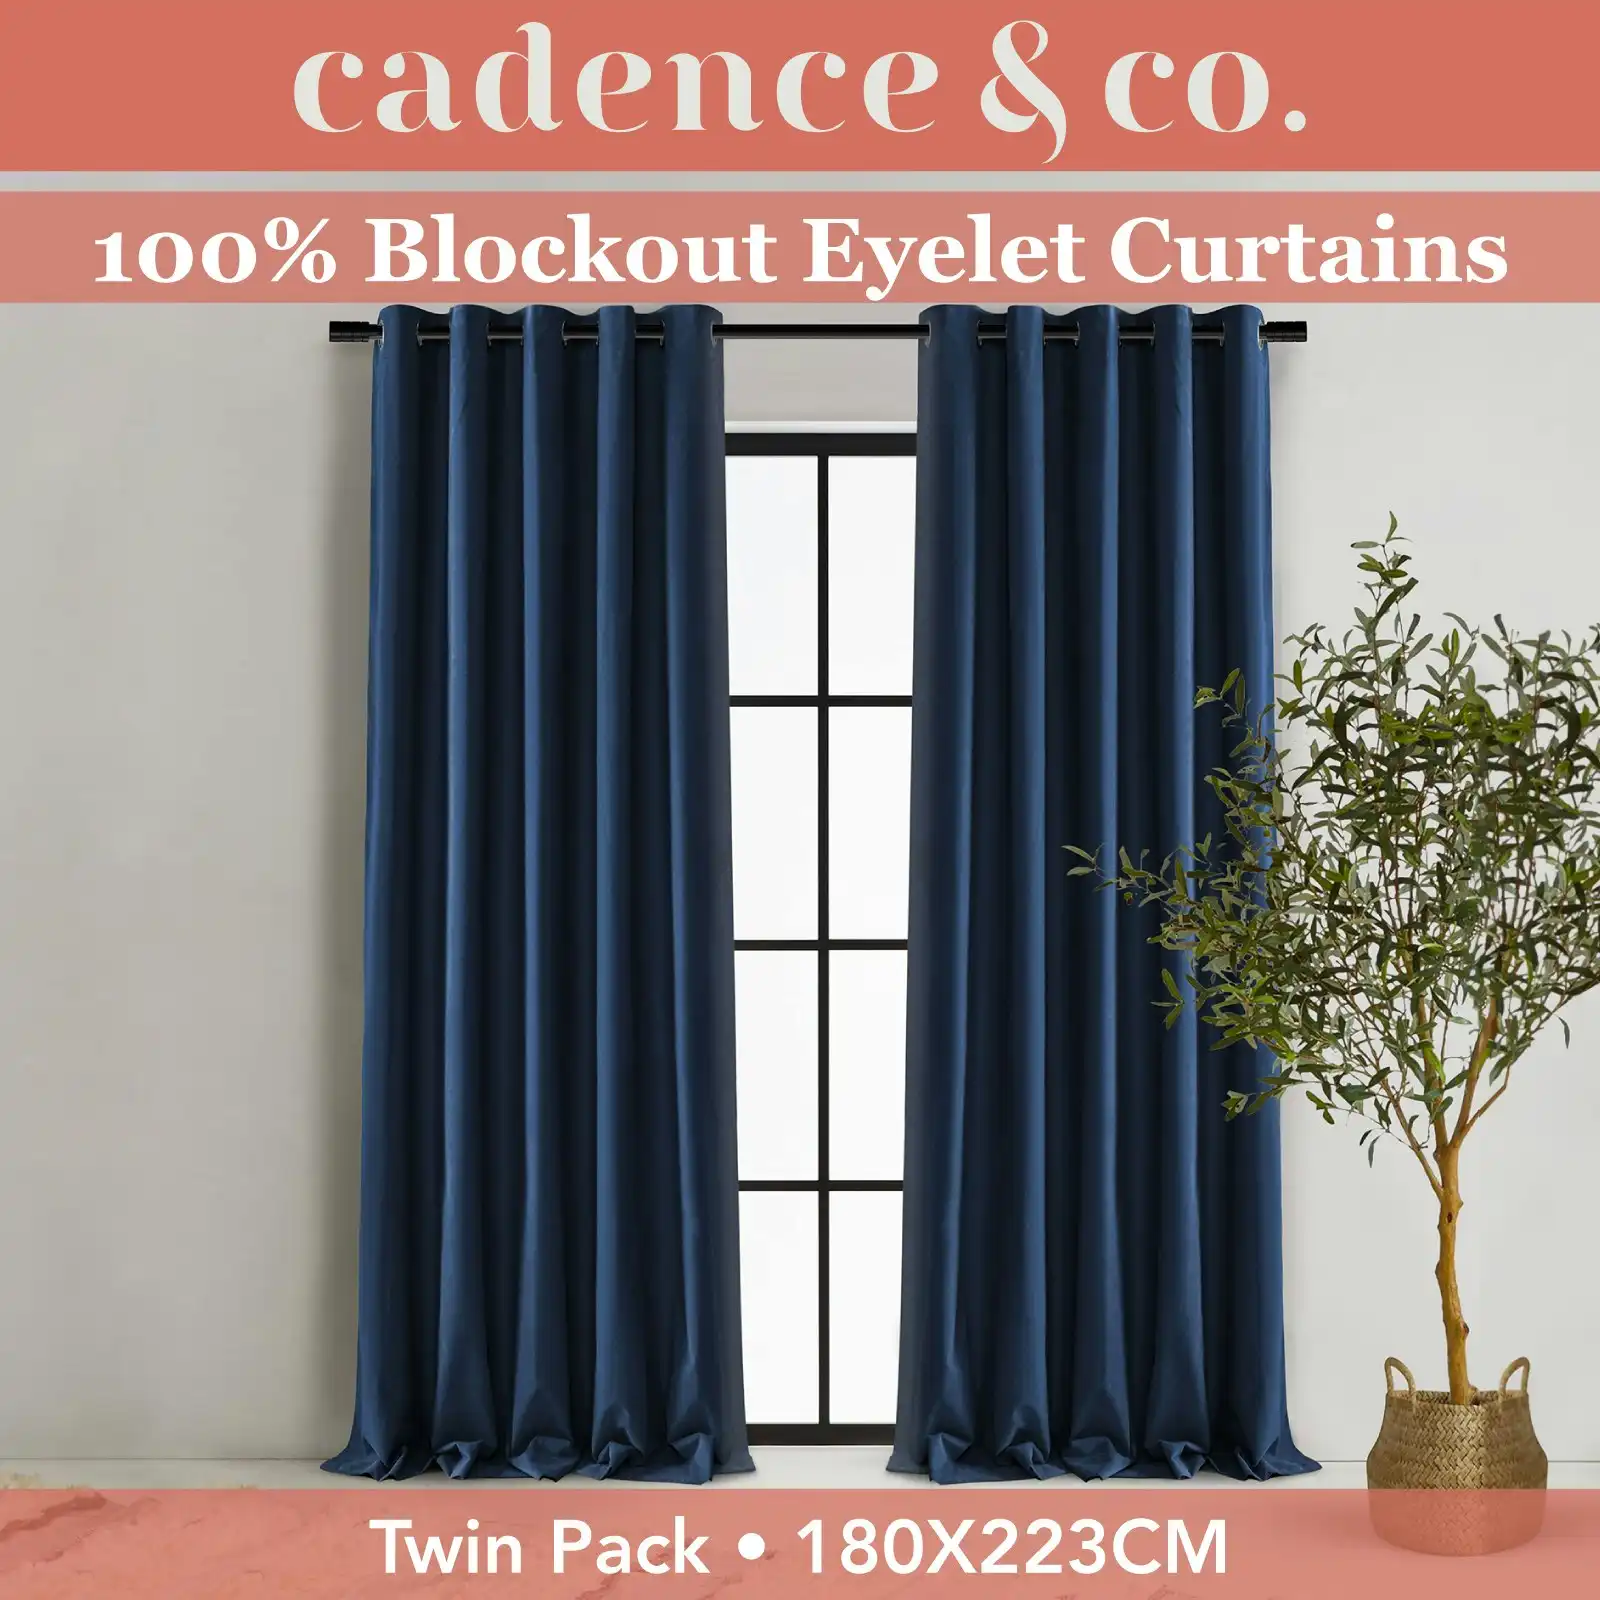 Cadence & Co. Byron Matte Velvet 100% Blockout Eyelet Curtains Twin Pack Ocean Blue 180x223cm